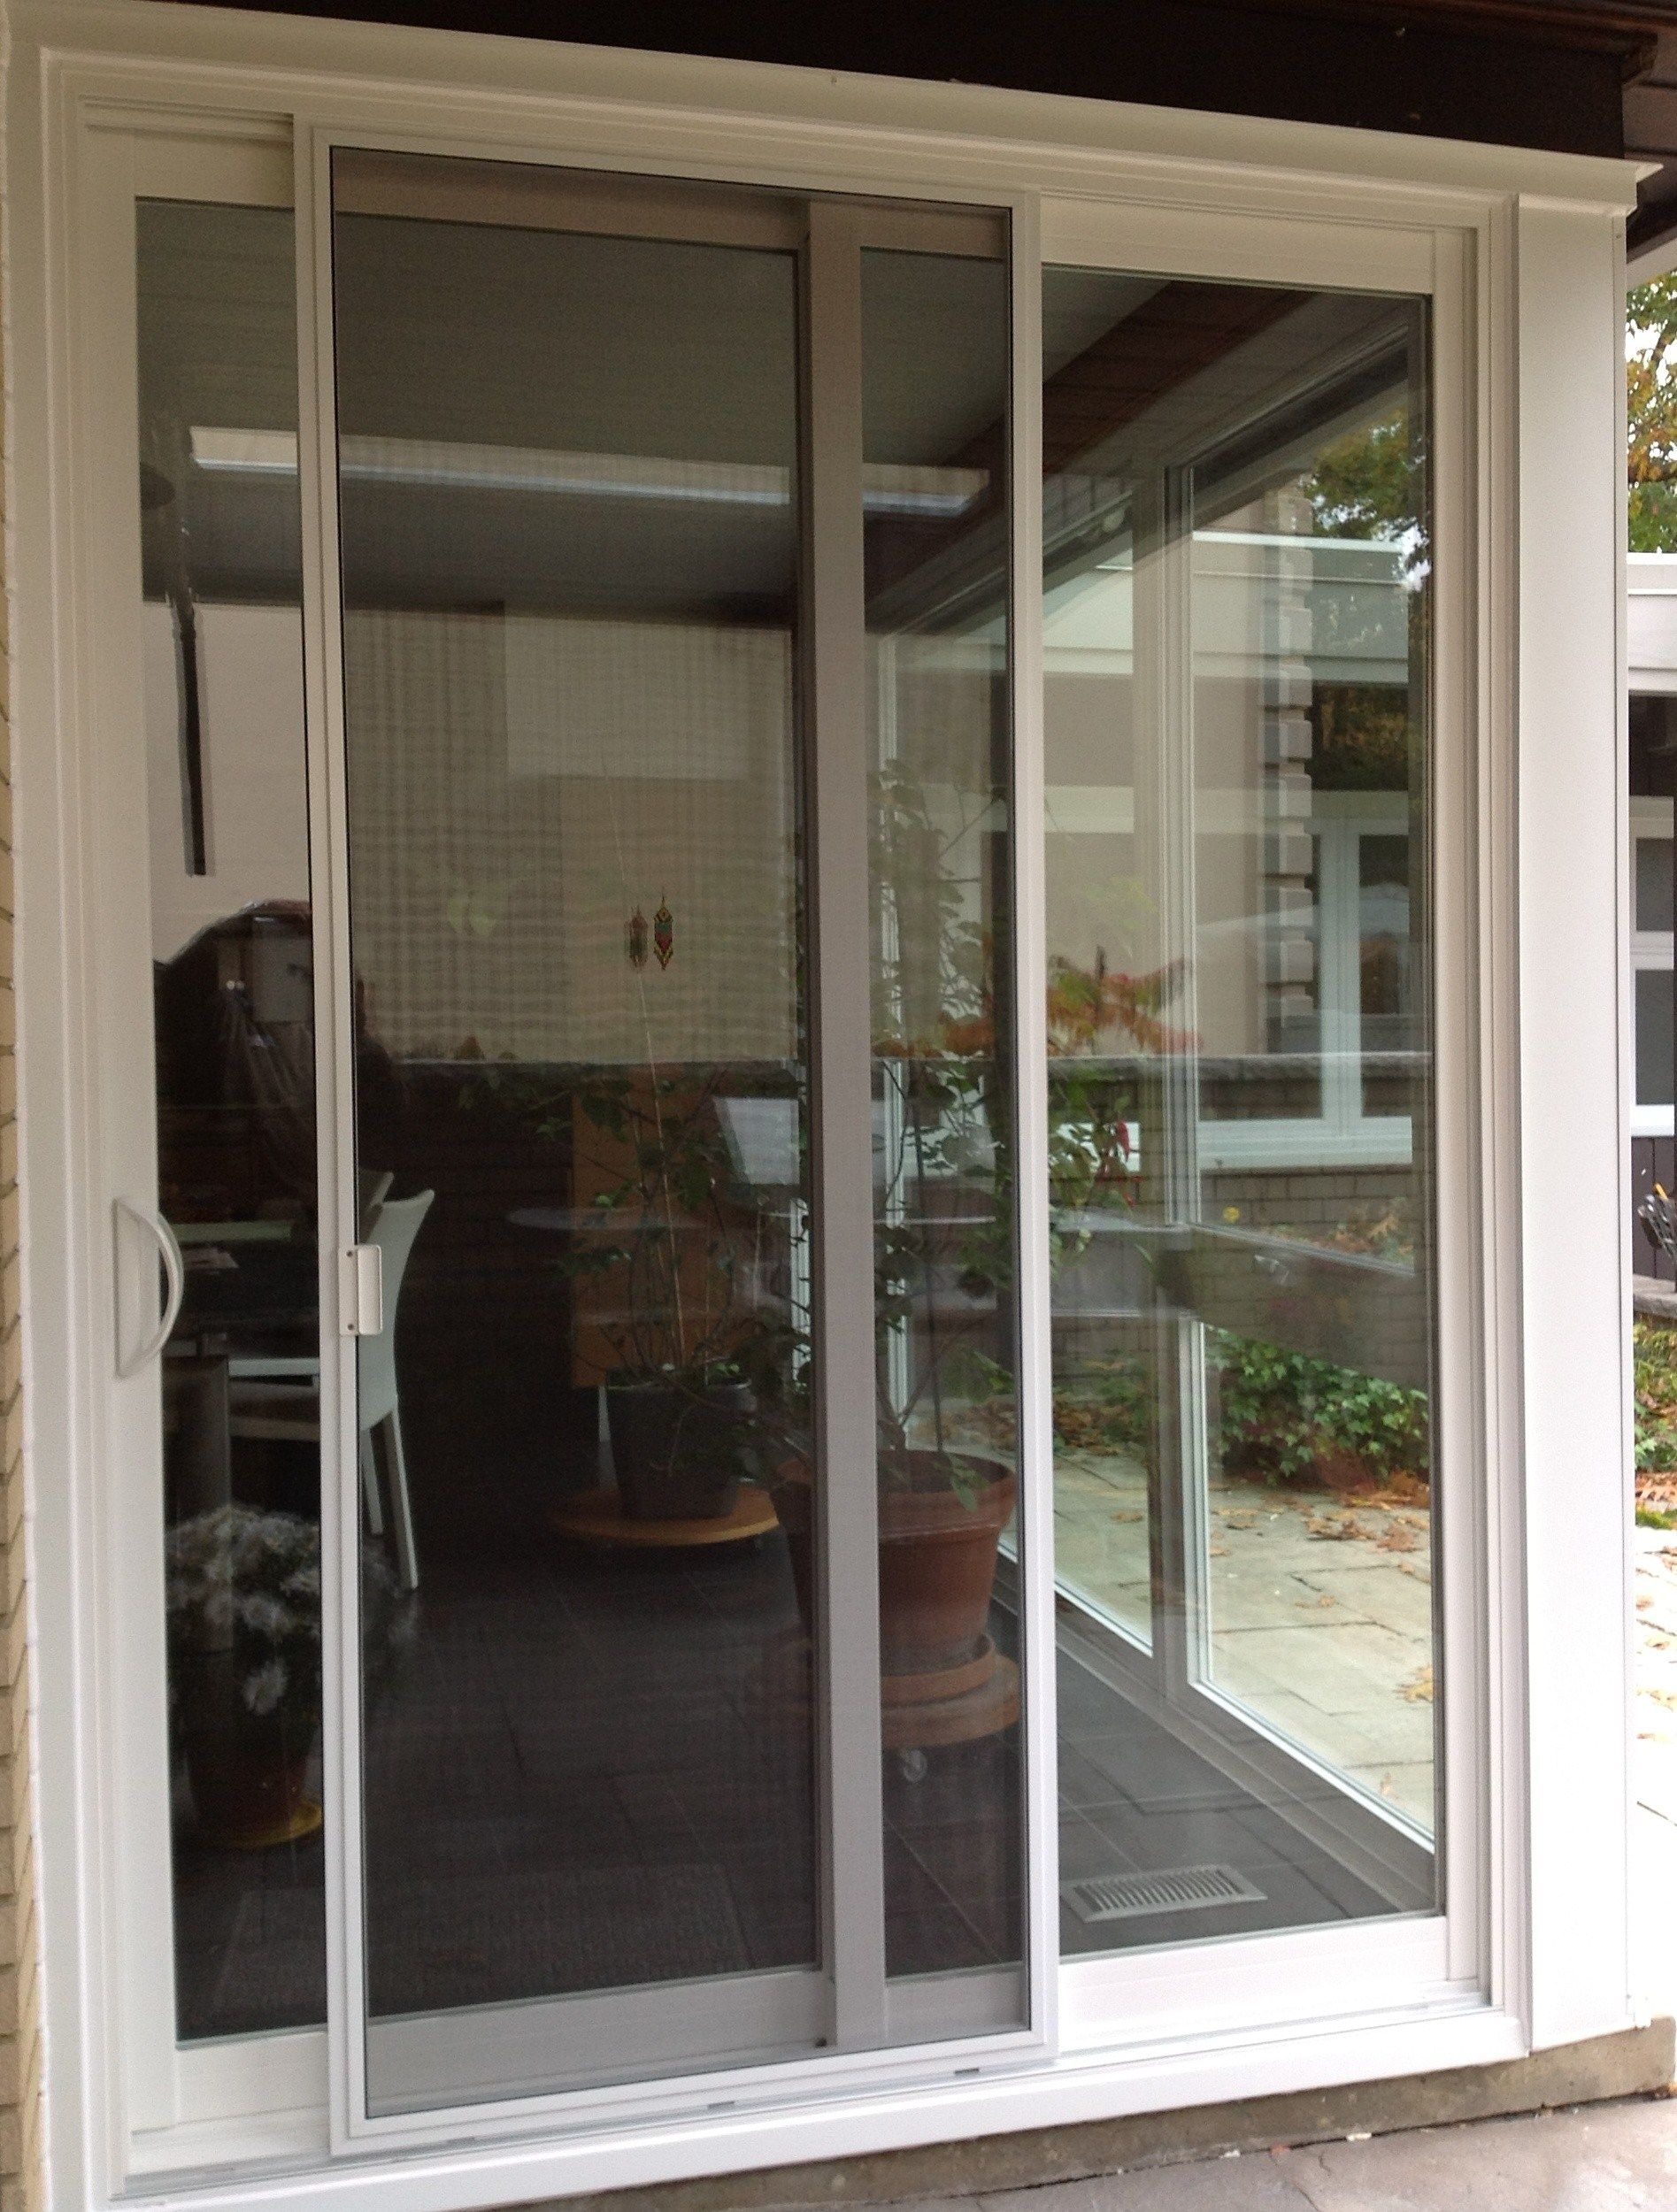 Best Of Door Handles For Sliding Glass Doors Home Decor with regard to dimensions 1895 X 2500